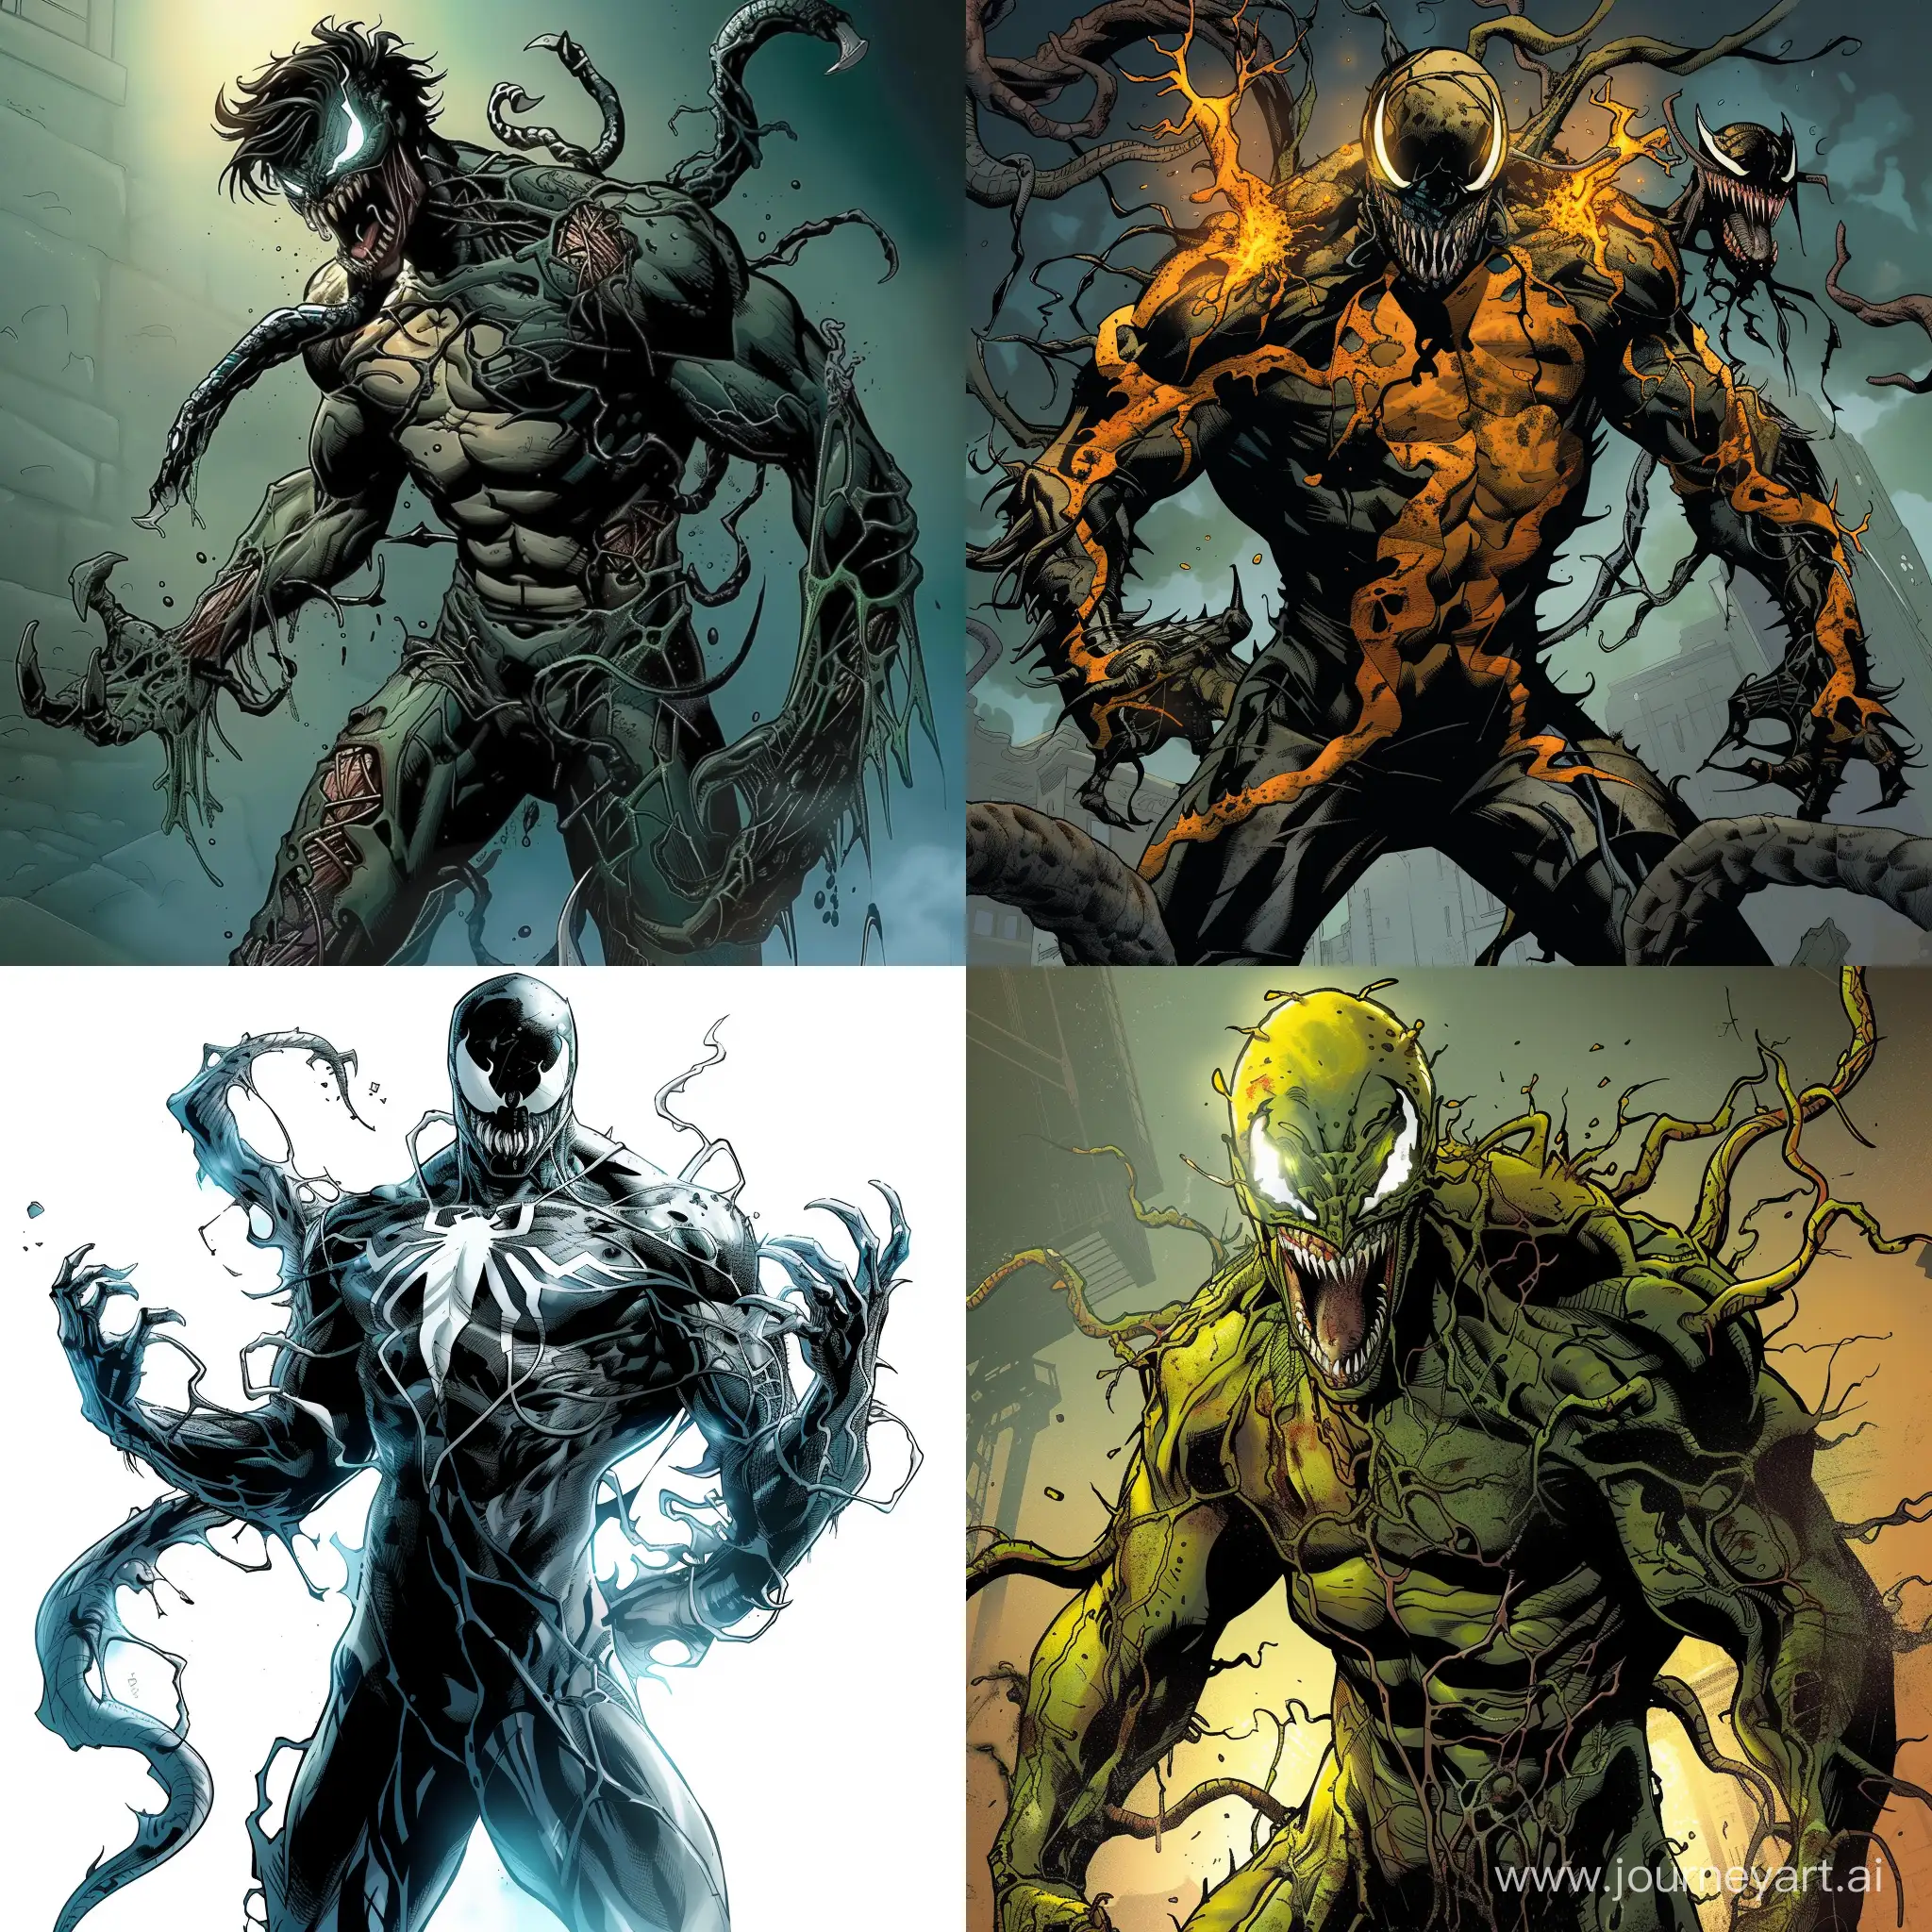 Dynamic-HalfGhost-SuperheroVillain-Drenched-in-Toxic-Venom